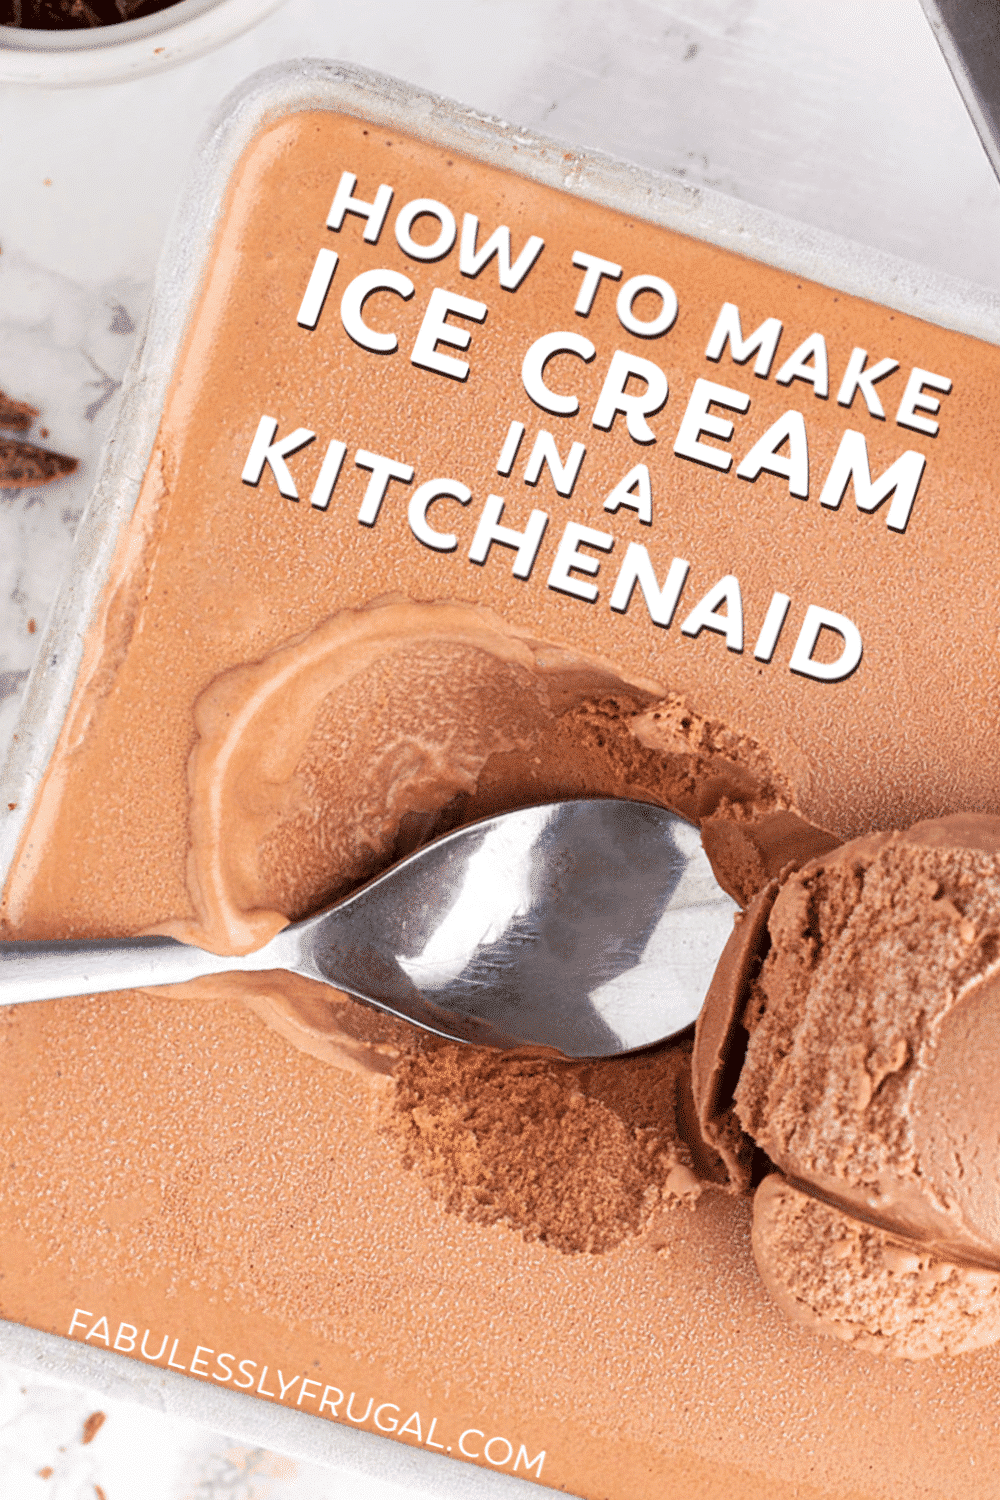 Ingredients for kitchenaid chocolate ice cream